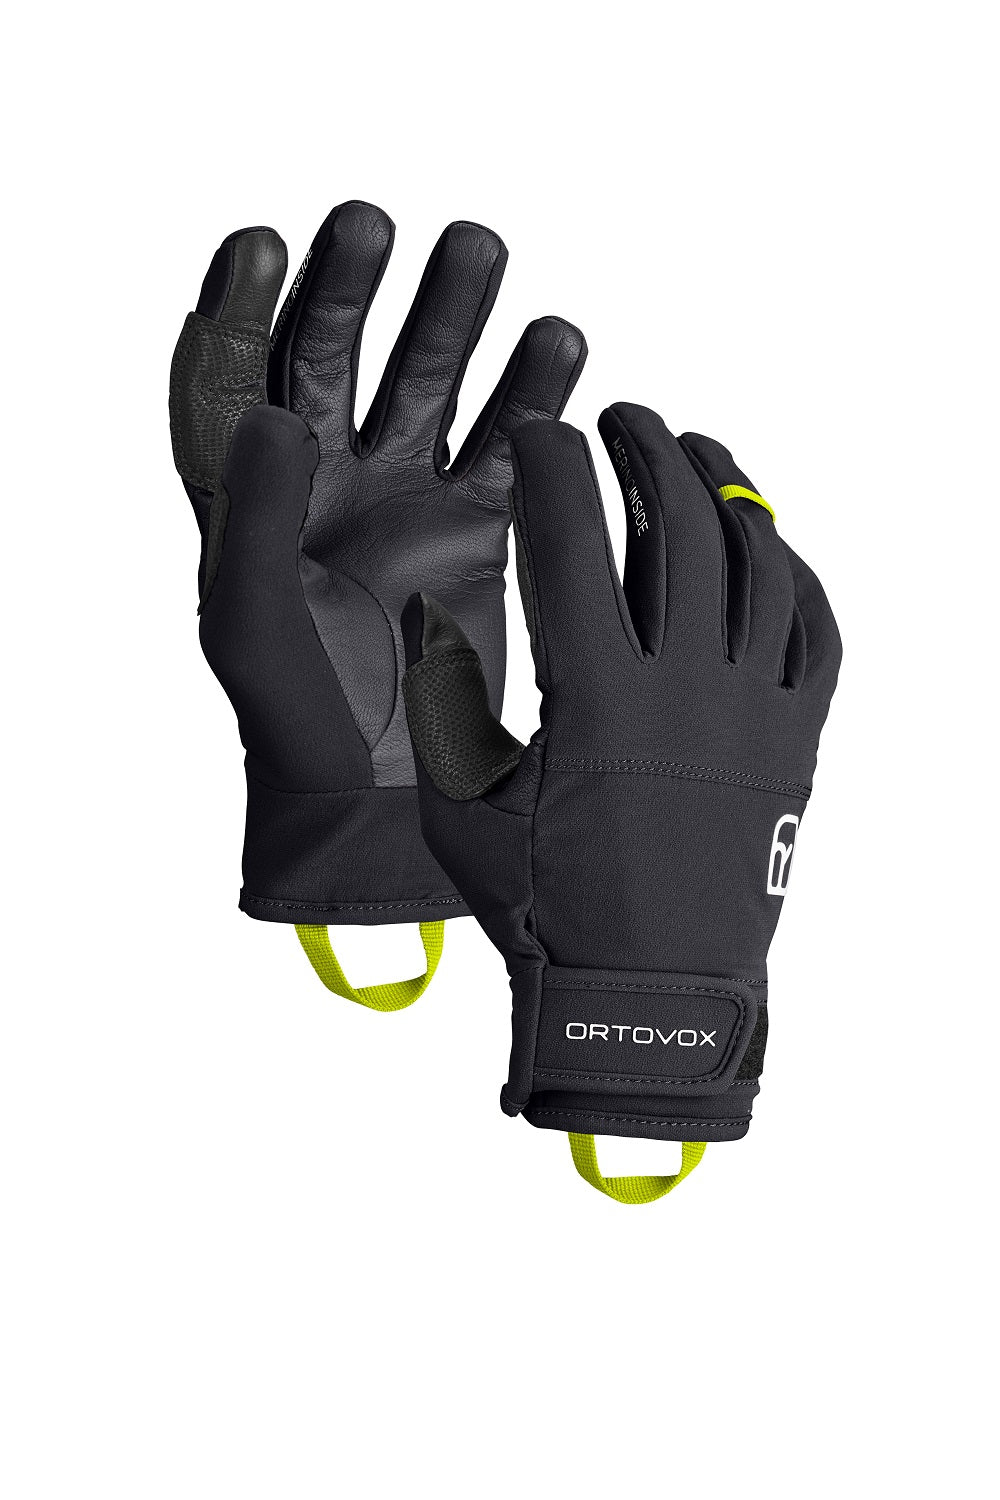 Ortovox Tour Light Glove M